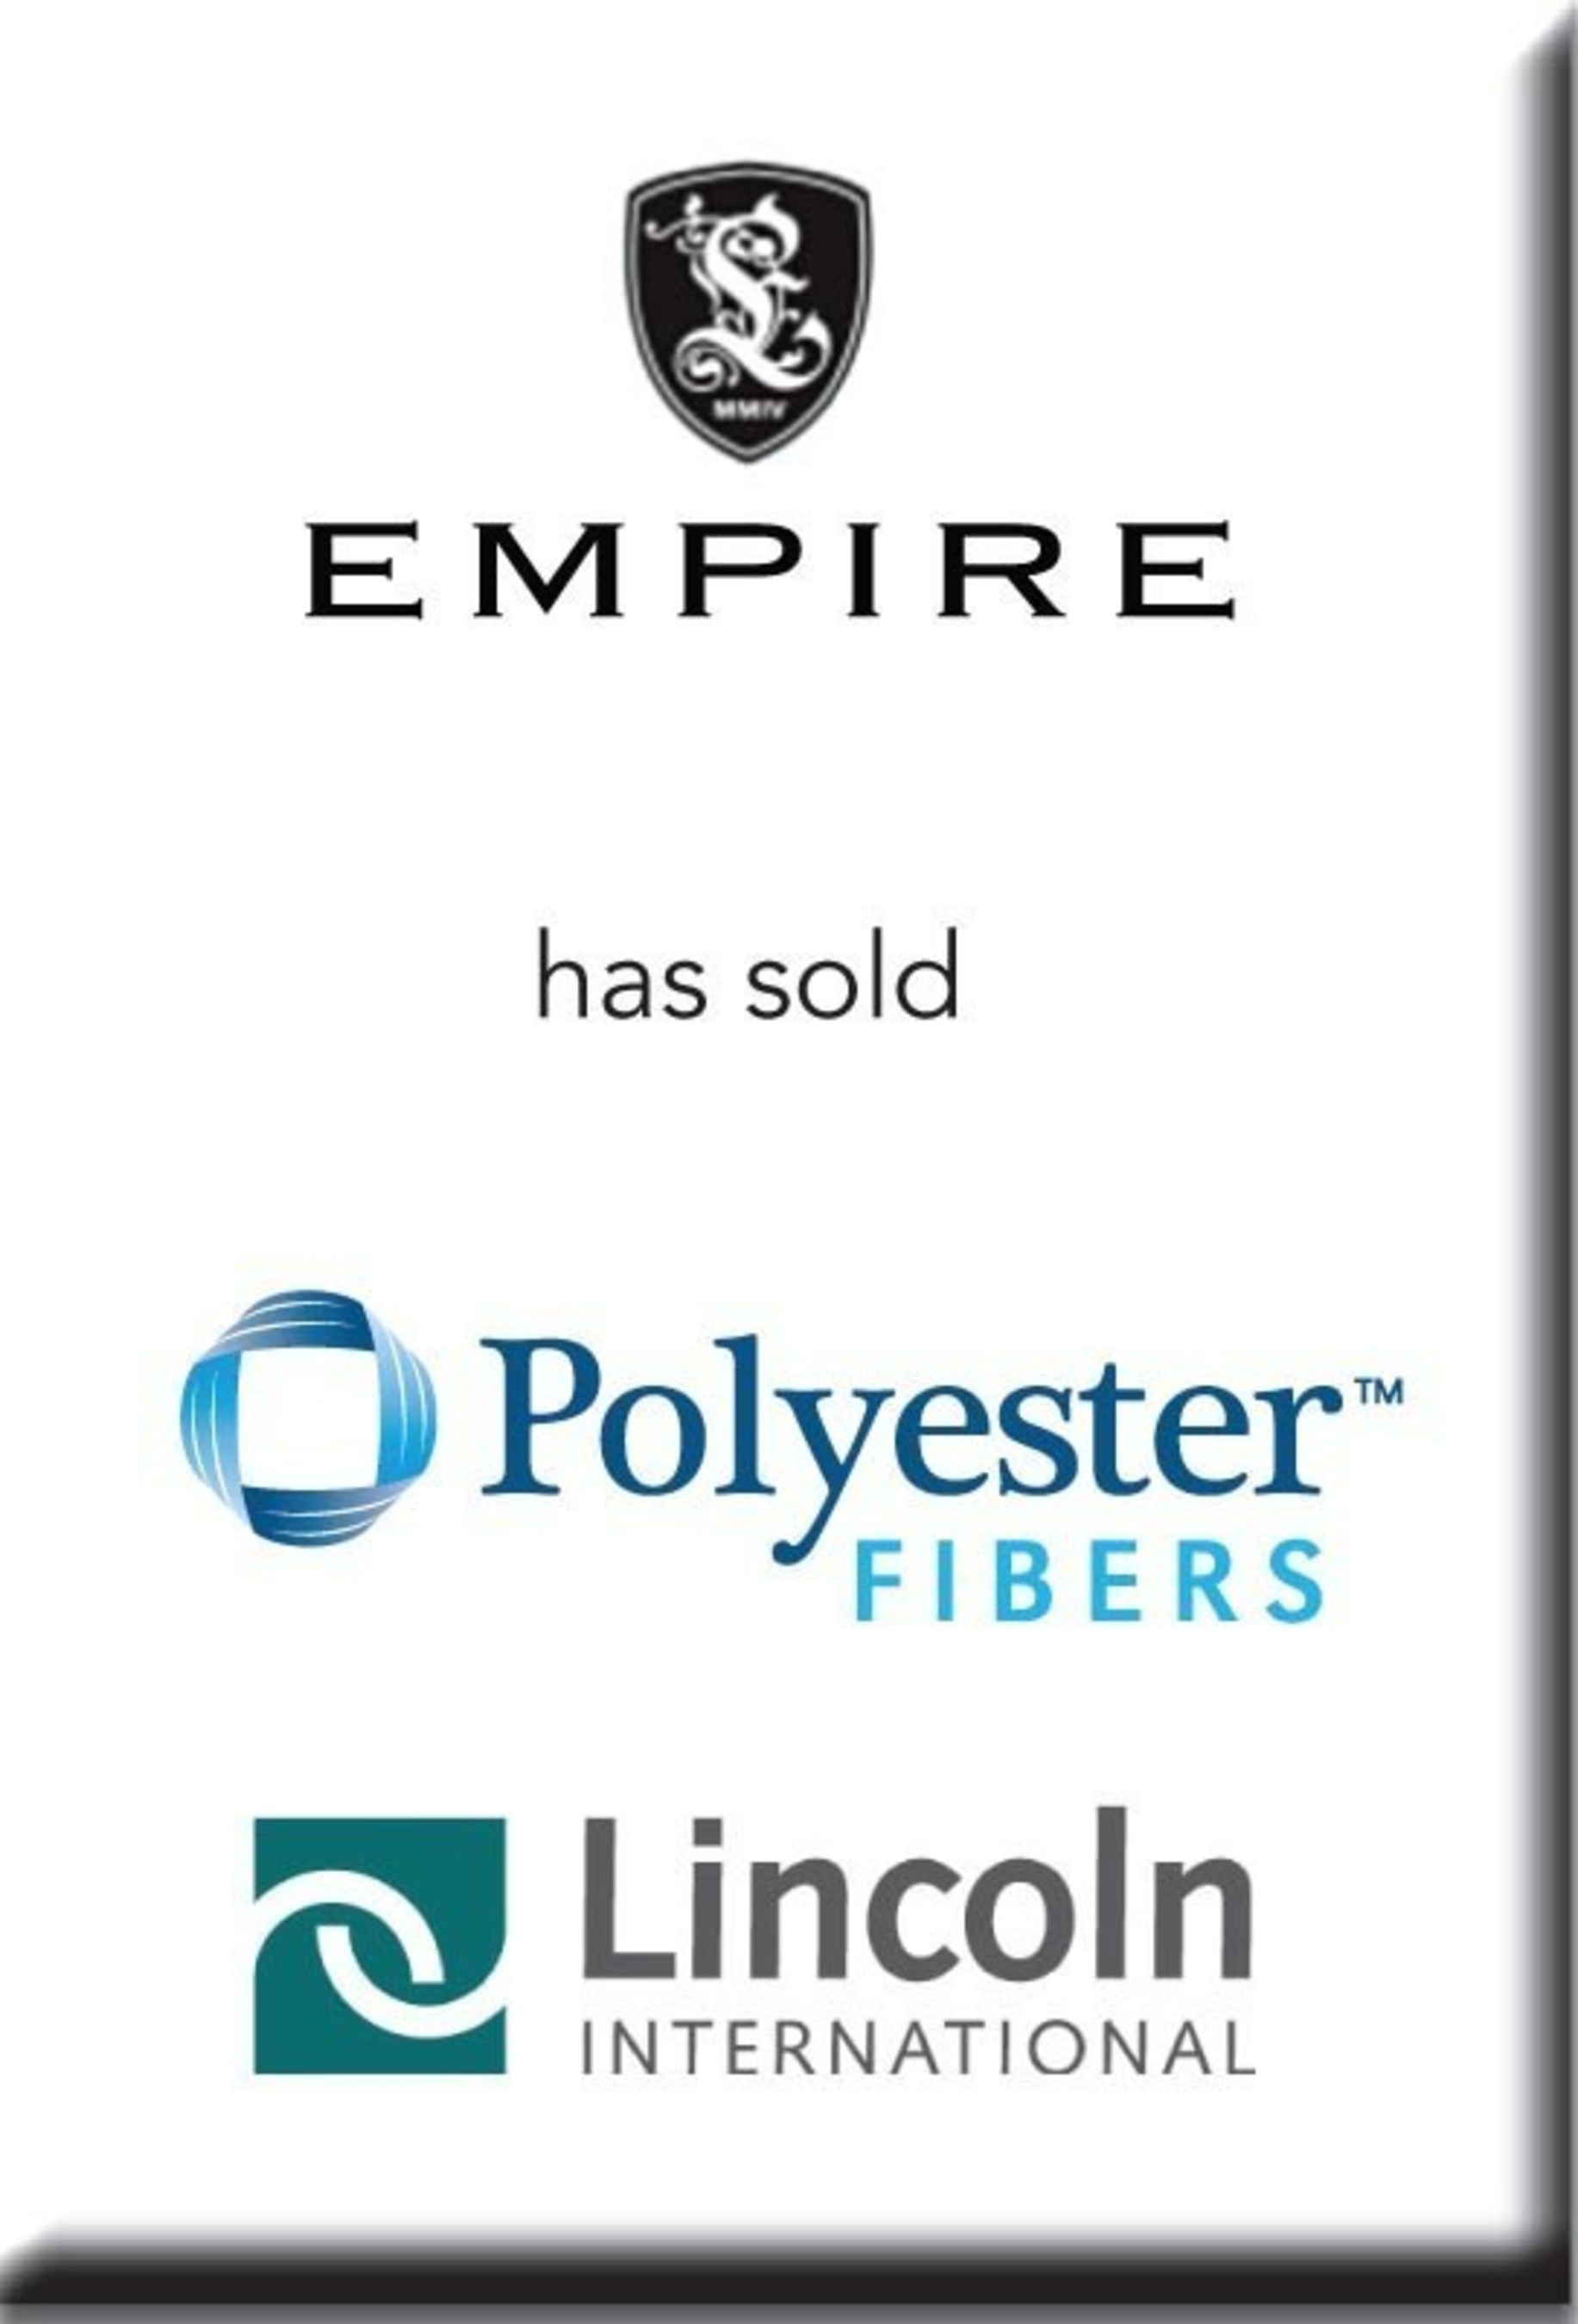 Lincoln International represents Polyester Fibers, LLC, a portfolio company of Empire Investment Holdings, LLC in its sale. (PRNewsFoto/Lincoln International)